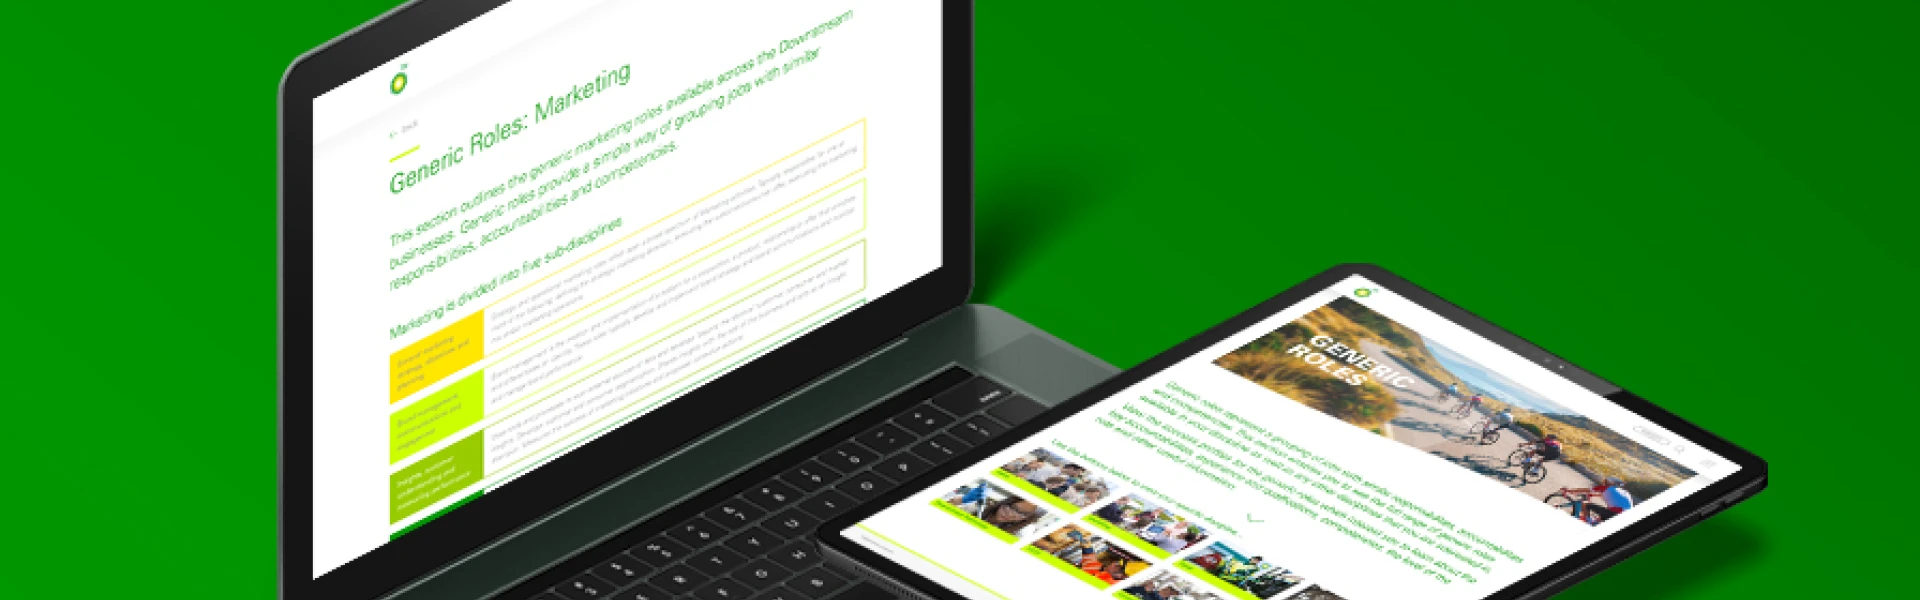 BP Careers Portal web design on desktop and tablet